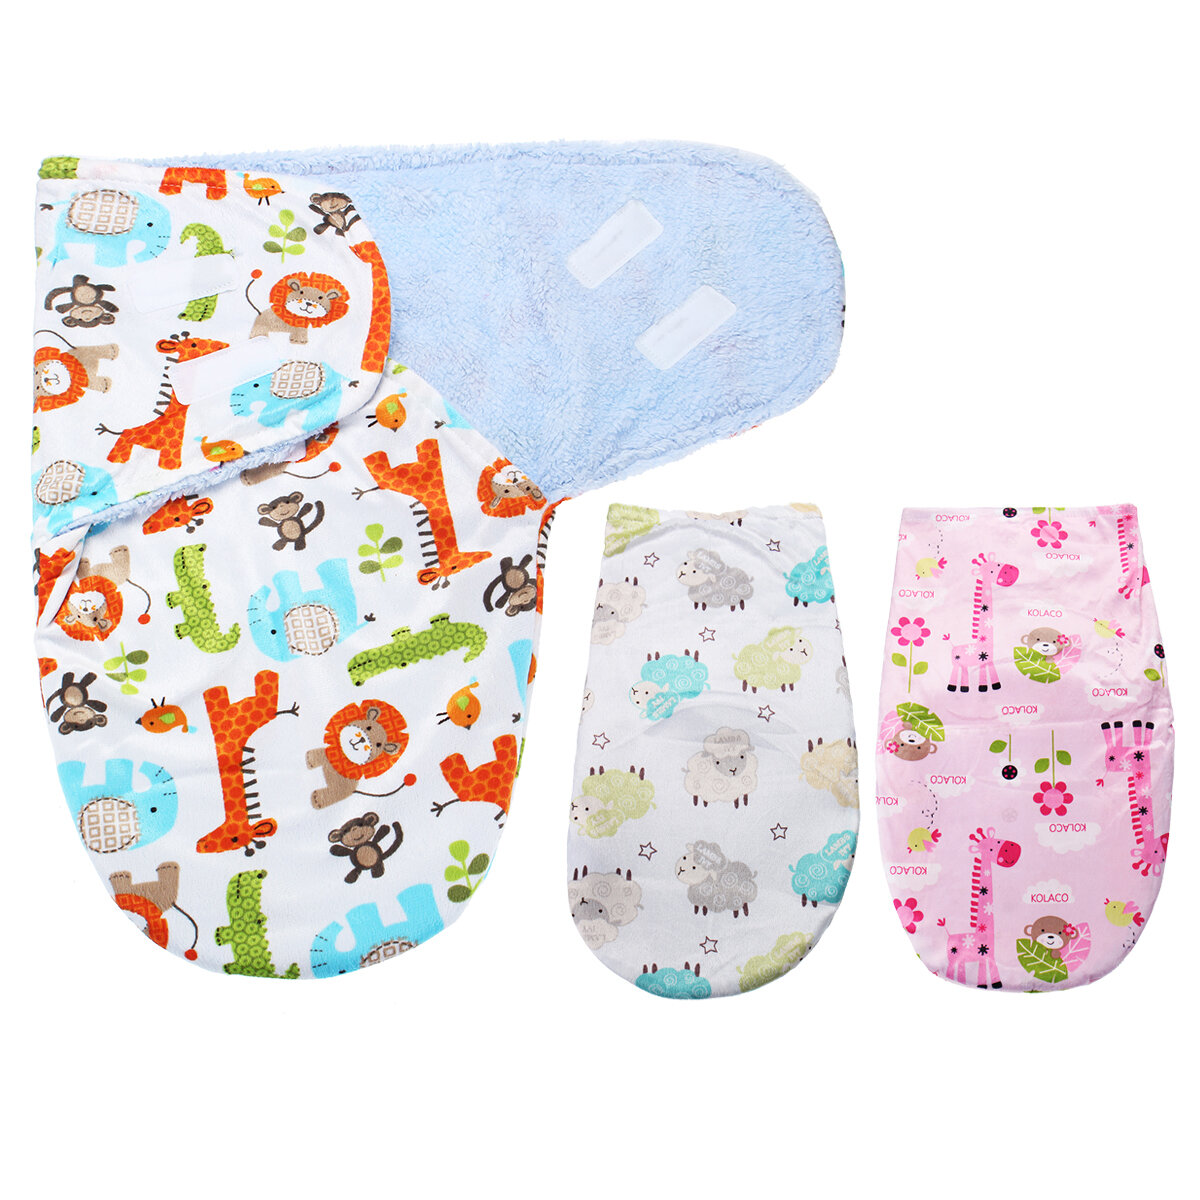 Newborn Unisex Cosy Secure Baby Swaddle Blanket Wrap Sleeping Bag for Pram Crib 